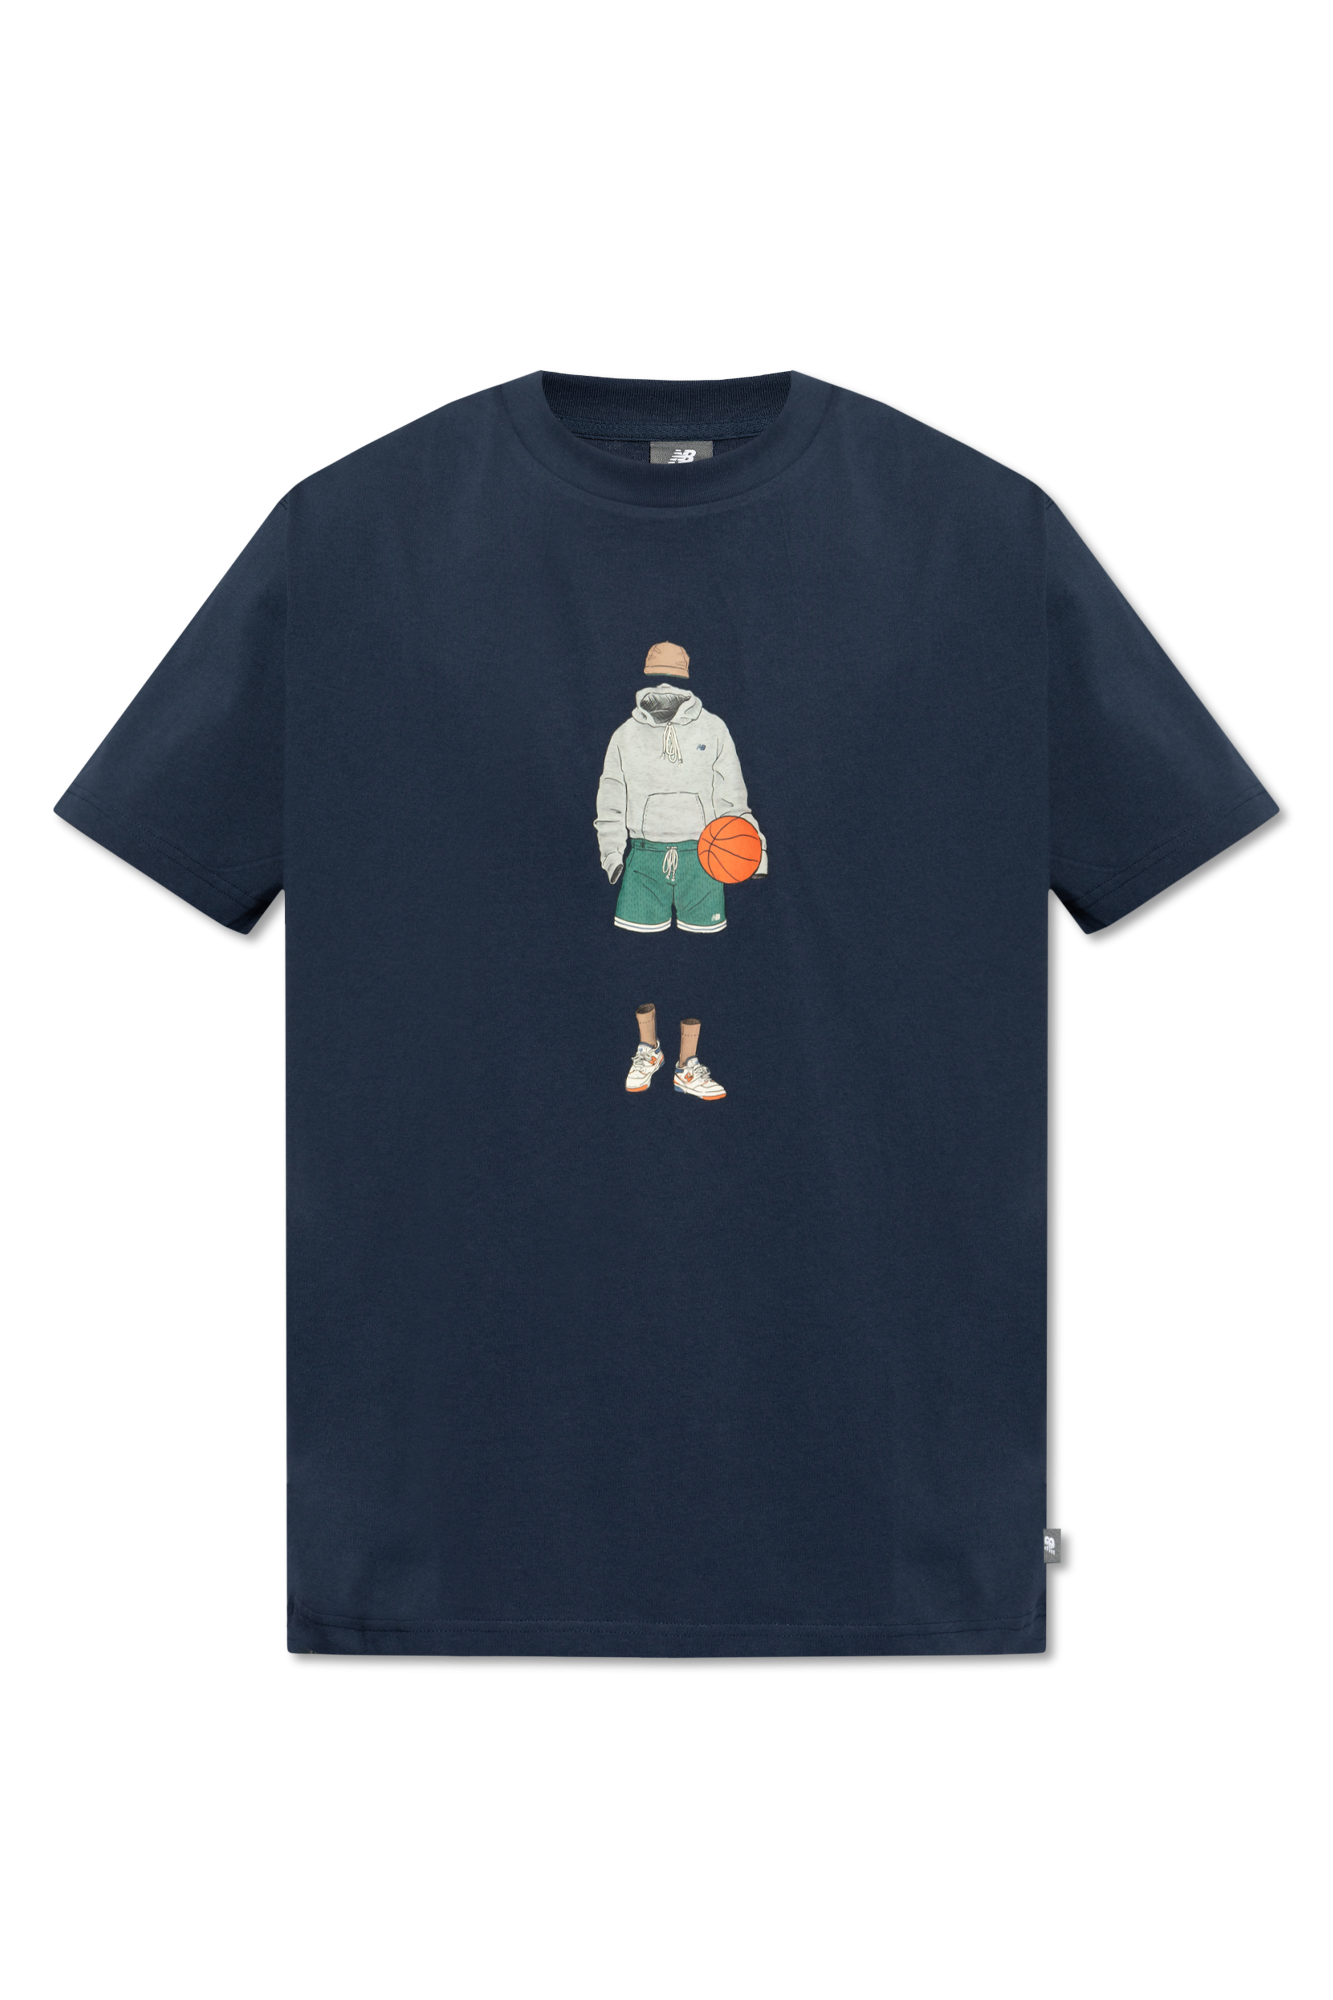 New Balance Cotton T-shirt